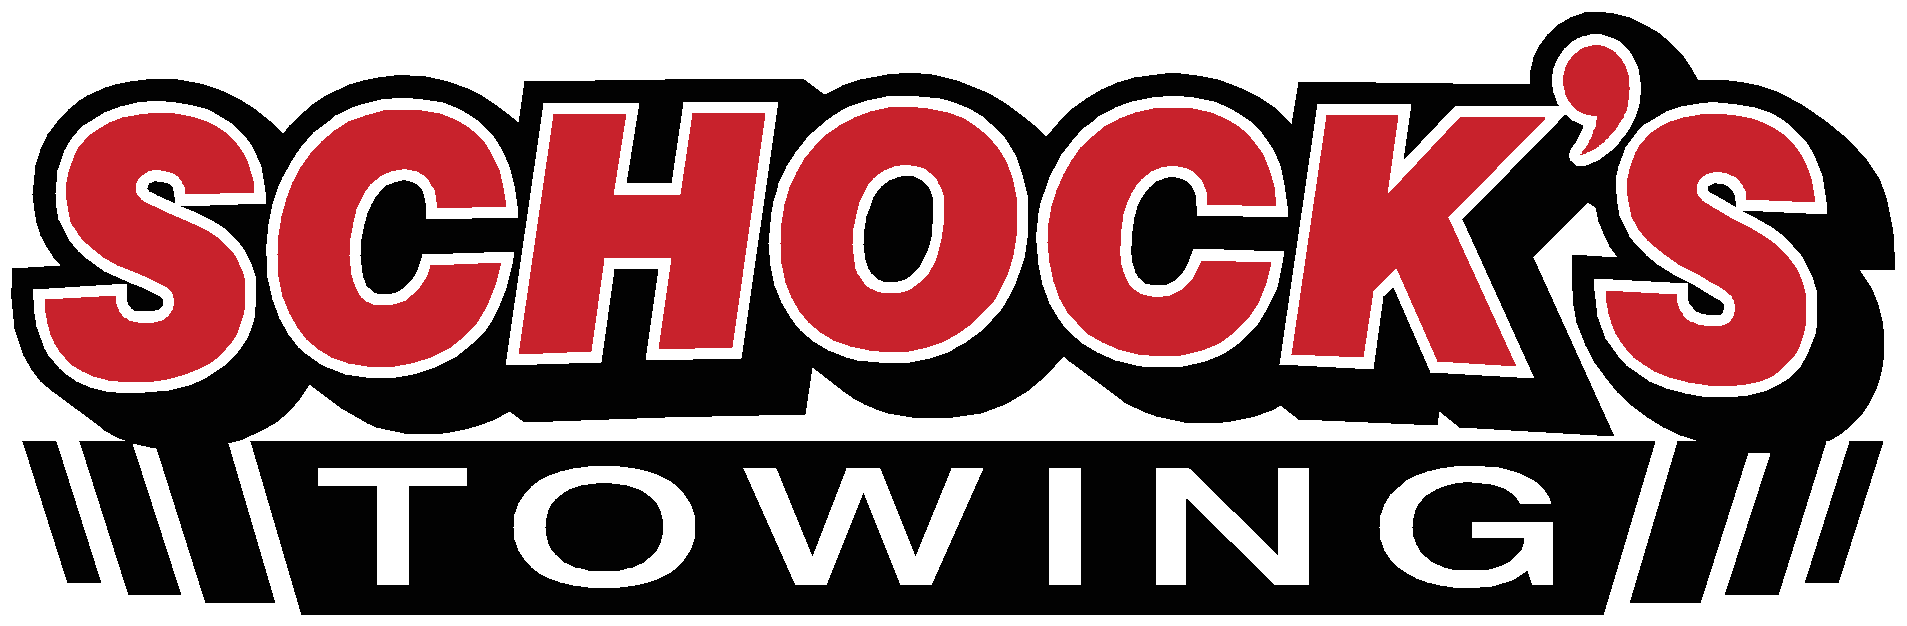 Schock's Towing - Logo